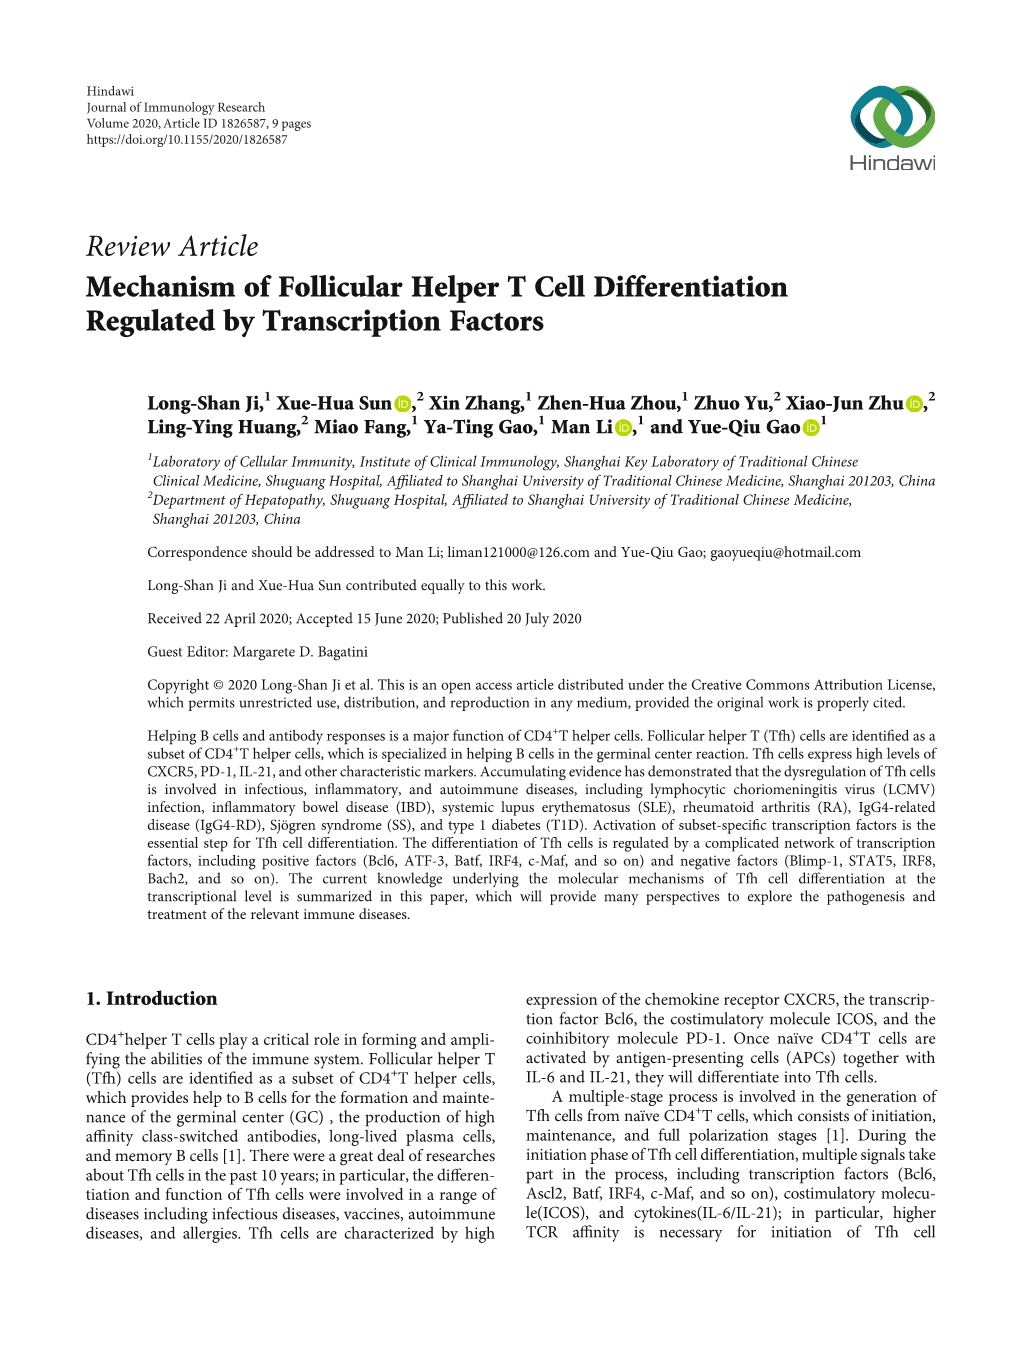 Mechanism of Follicular Helper T Cell Differentiation Regulated by Transcription Factors